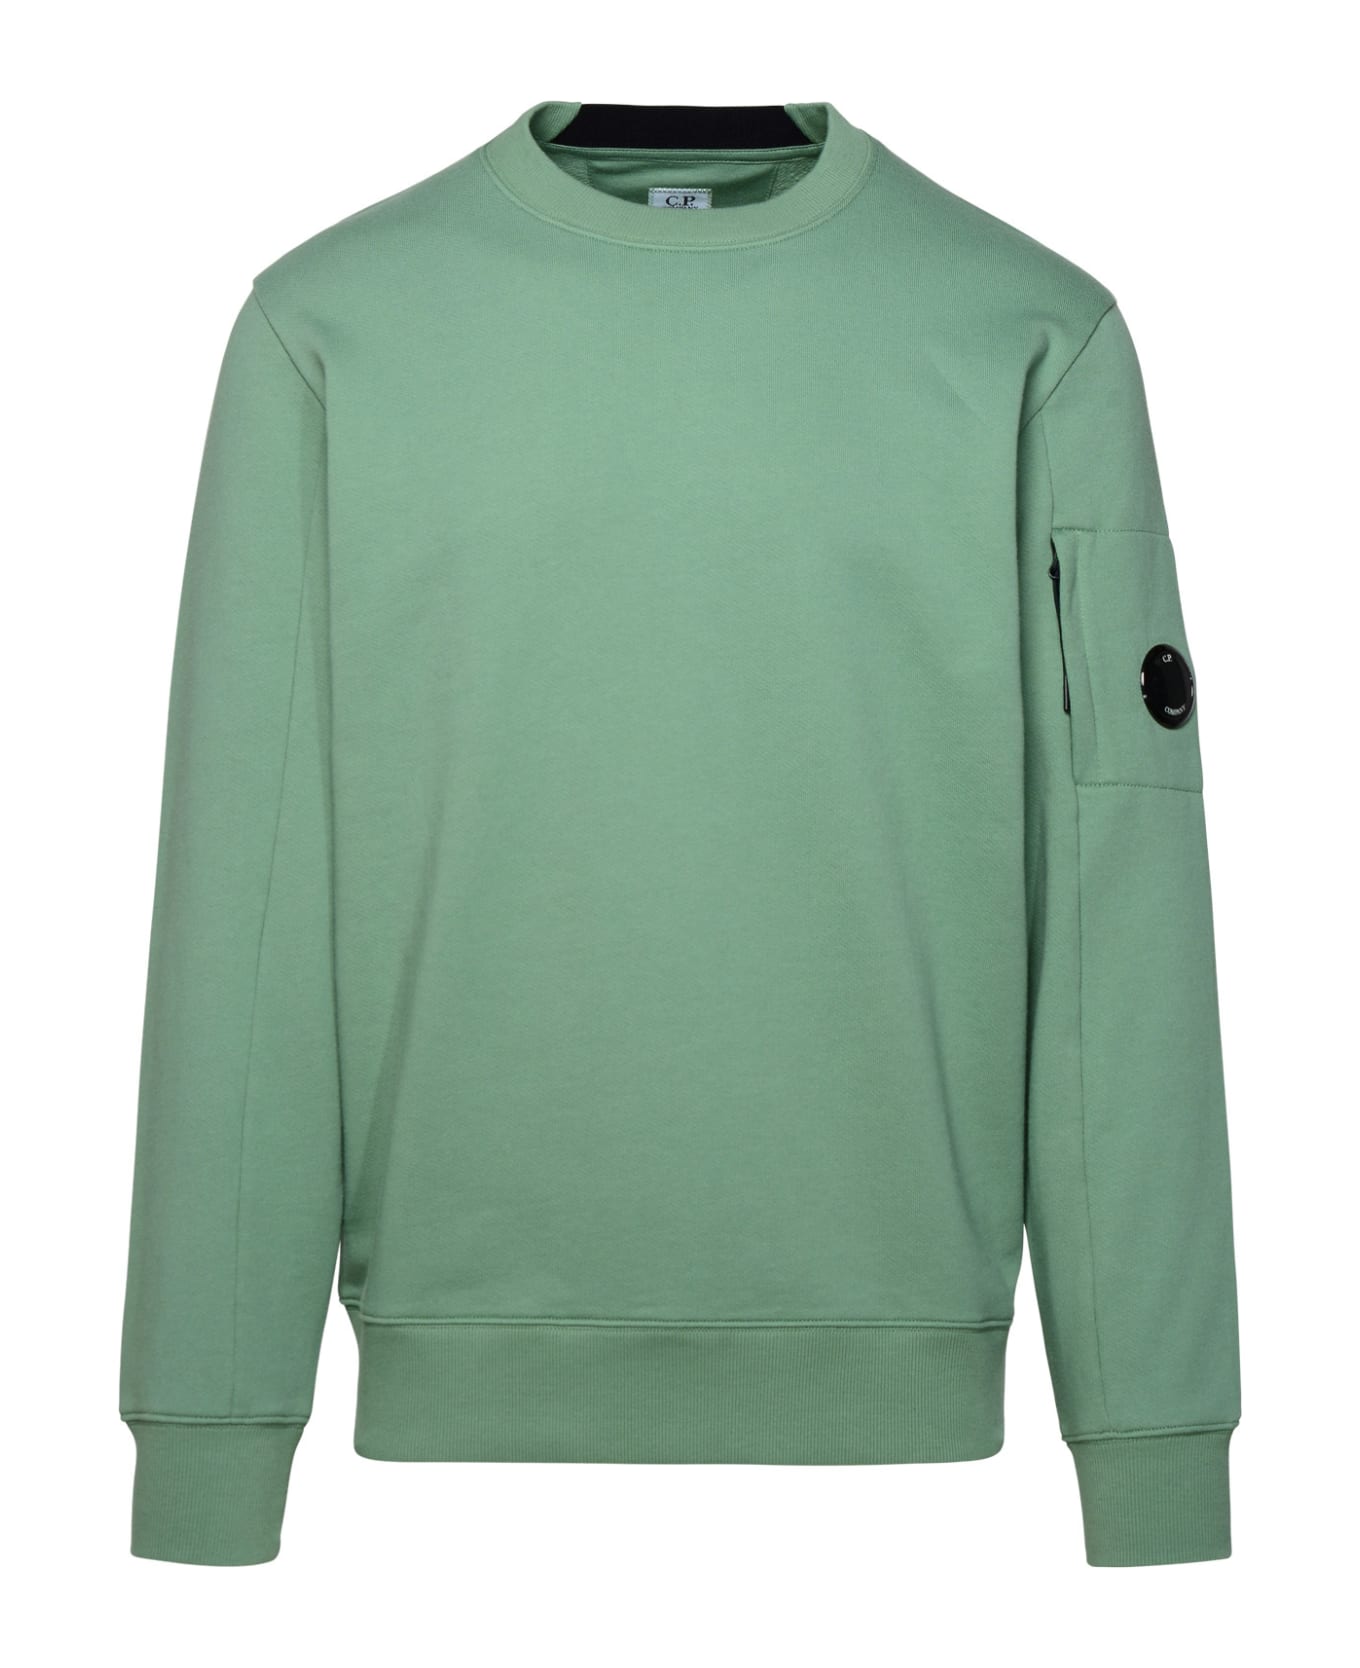 C.P. Company 'diagonal Raised Fleece' Green Cotton Sweatshirt - Verde salvia